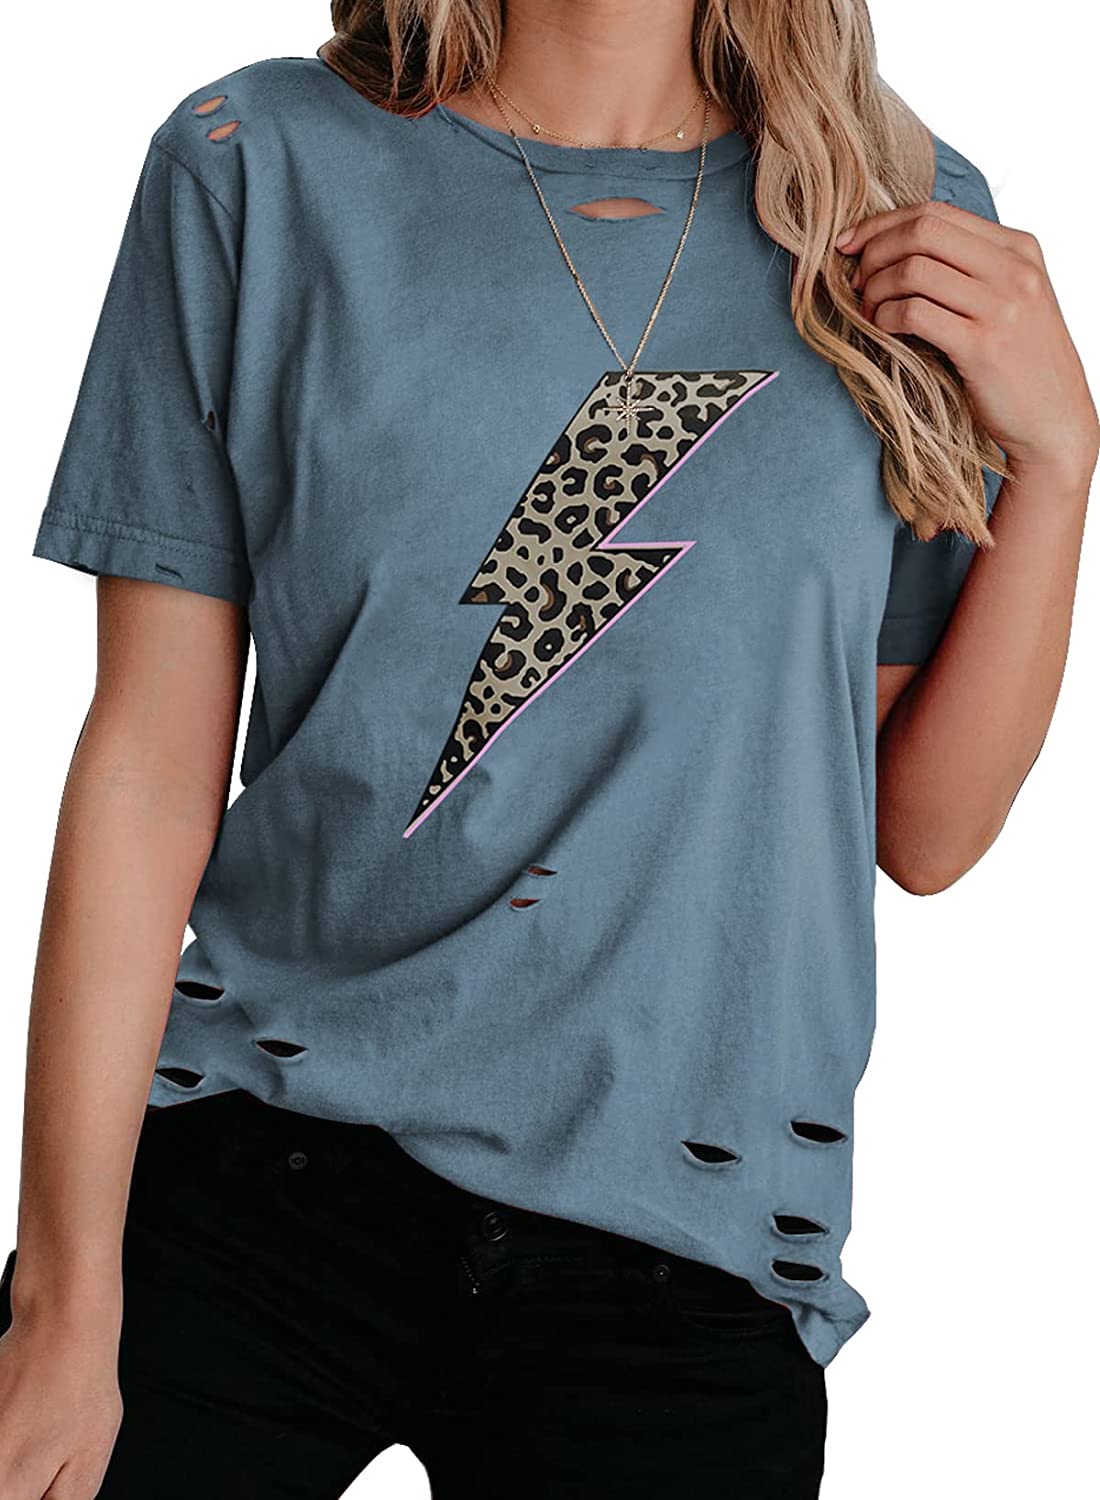 Elapsy Womens Print Tee T-Shirt Short Sleeve Casual Round Neck Summer Blouse Shirt Tops 